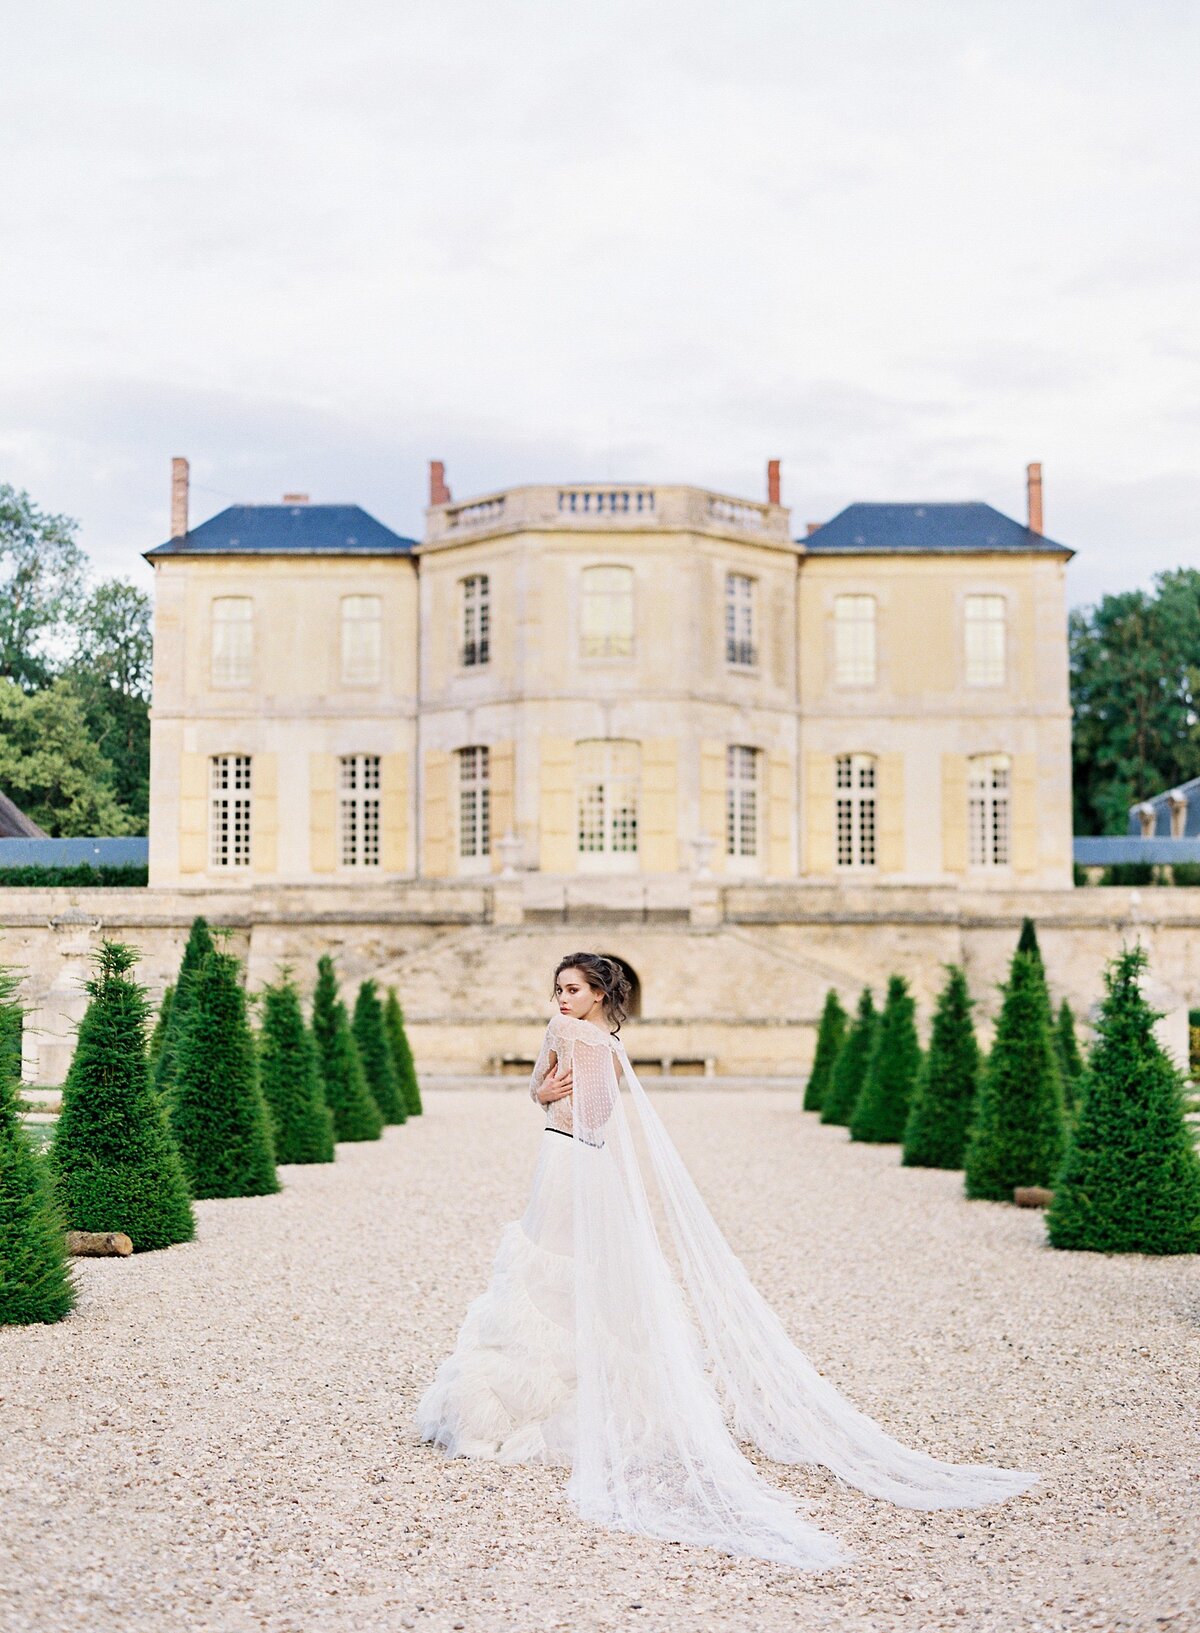 NKT-Events_Wedding-Inspiration-Editorial_Chateau-de-Villette-Bridal_0202